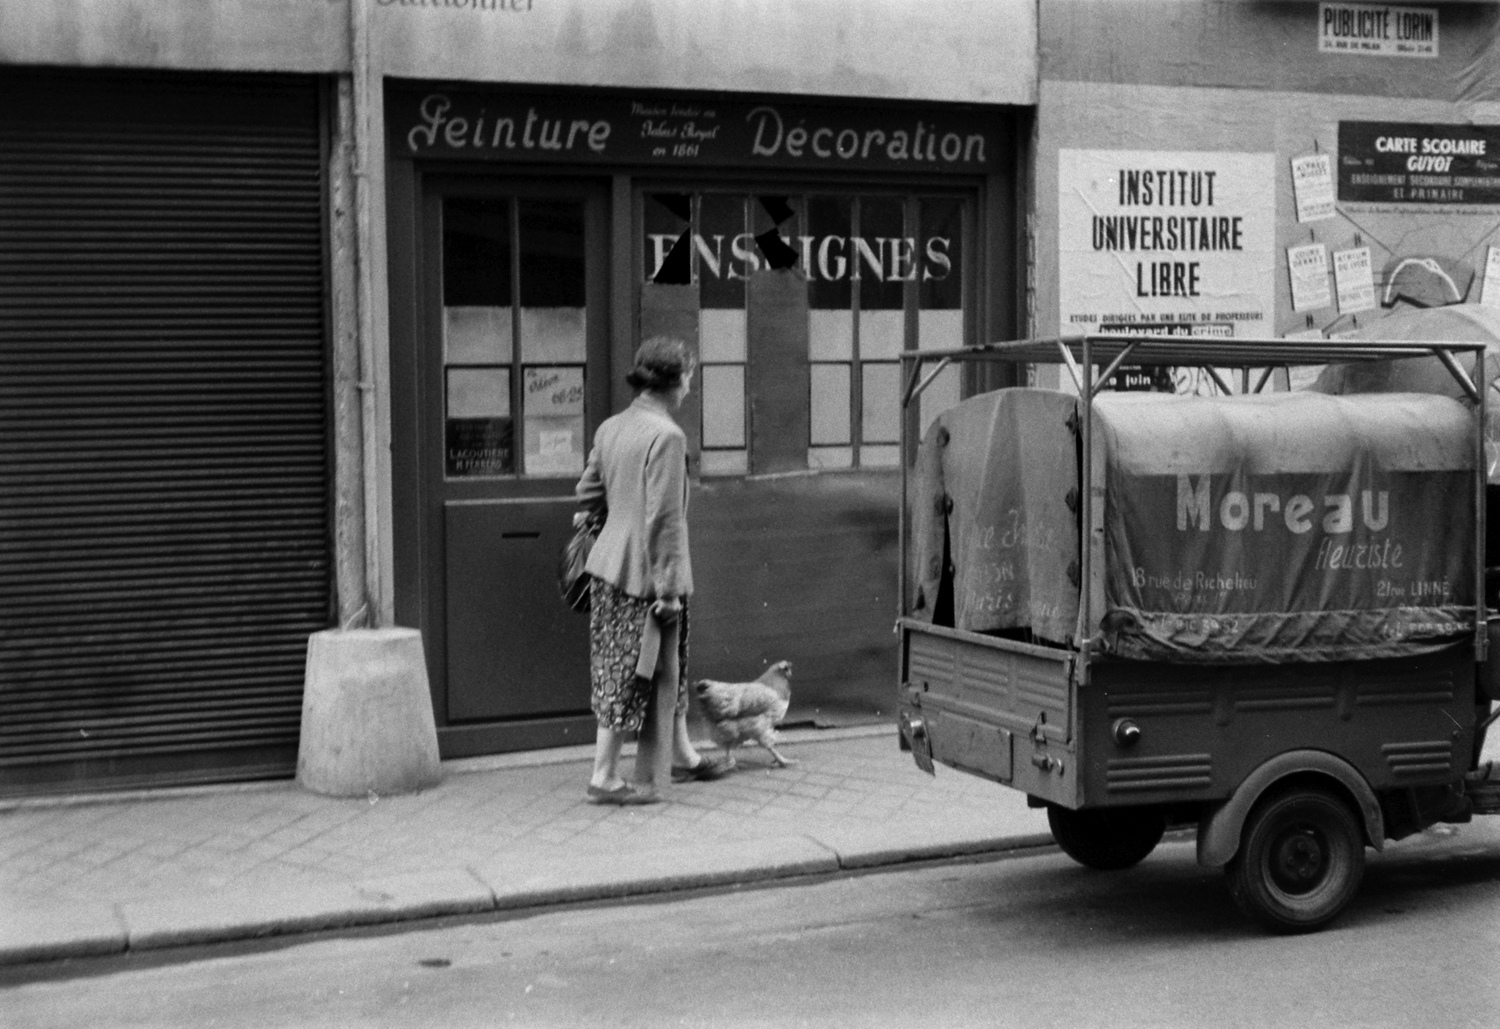 A woman named Marguerite walks a chicken in Paris, 1956.